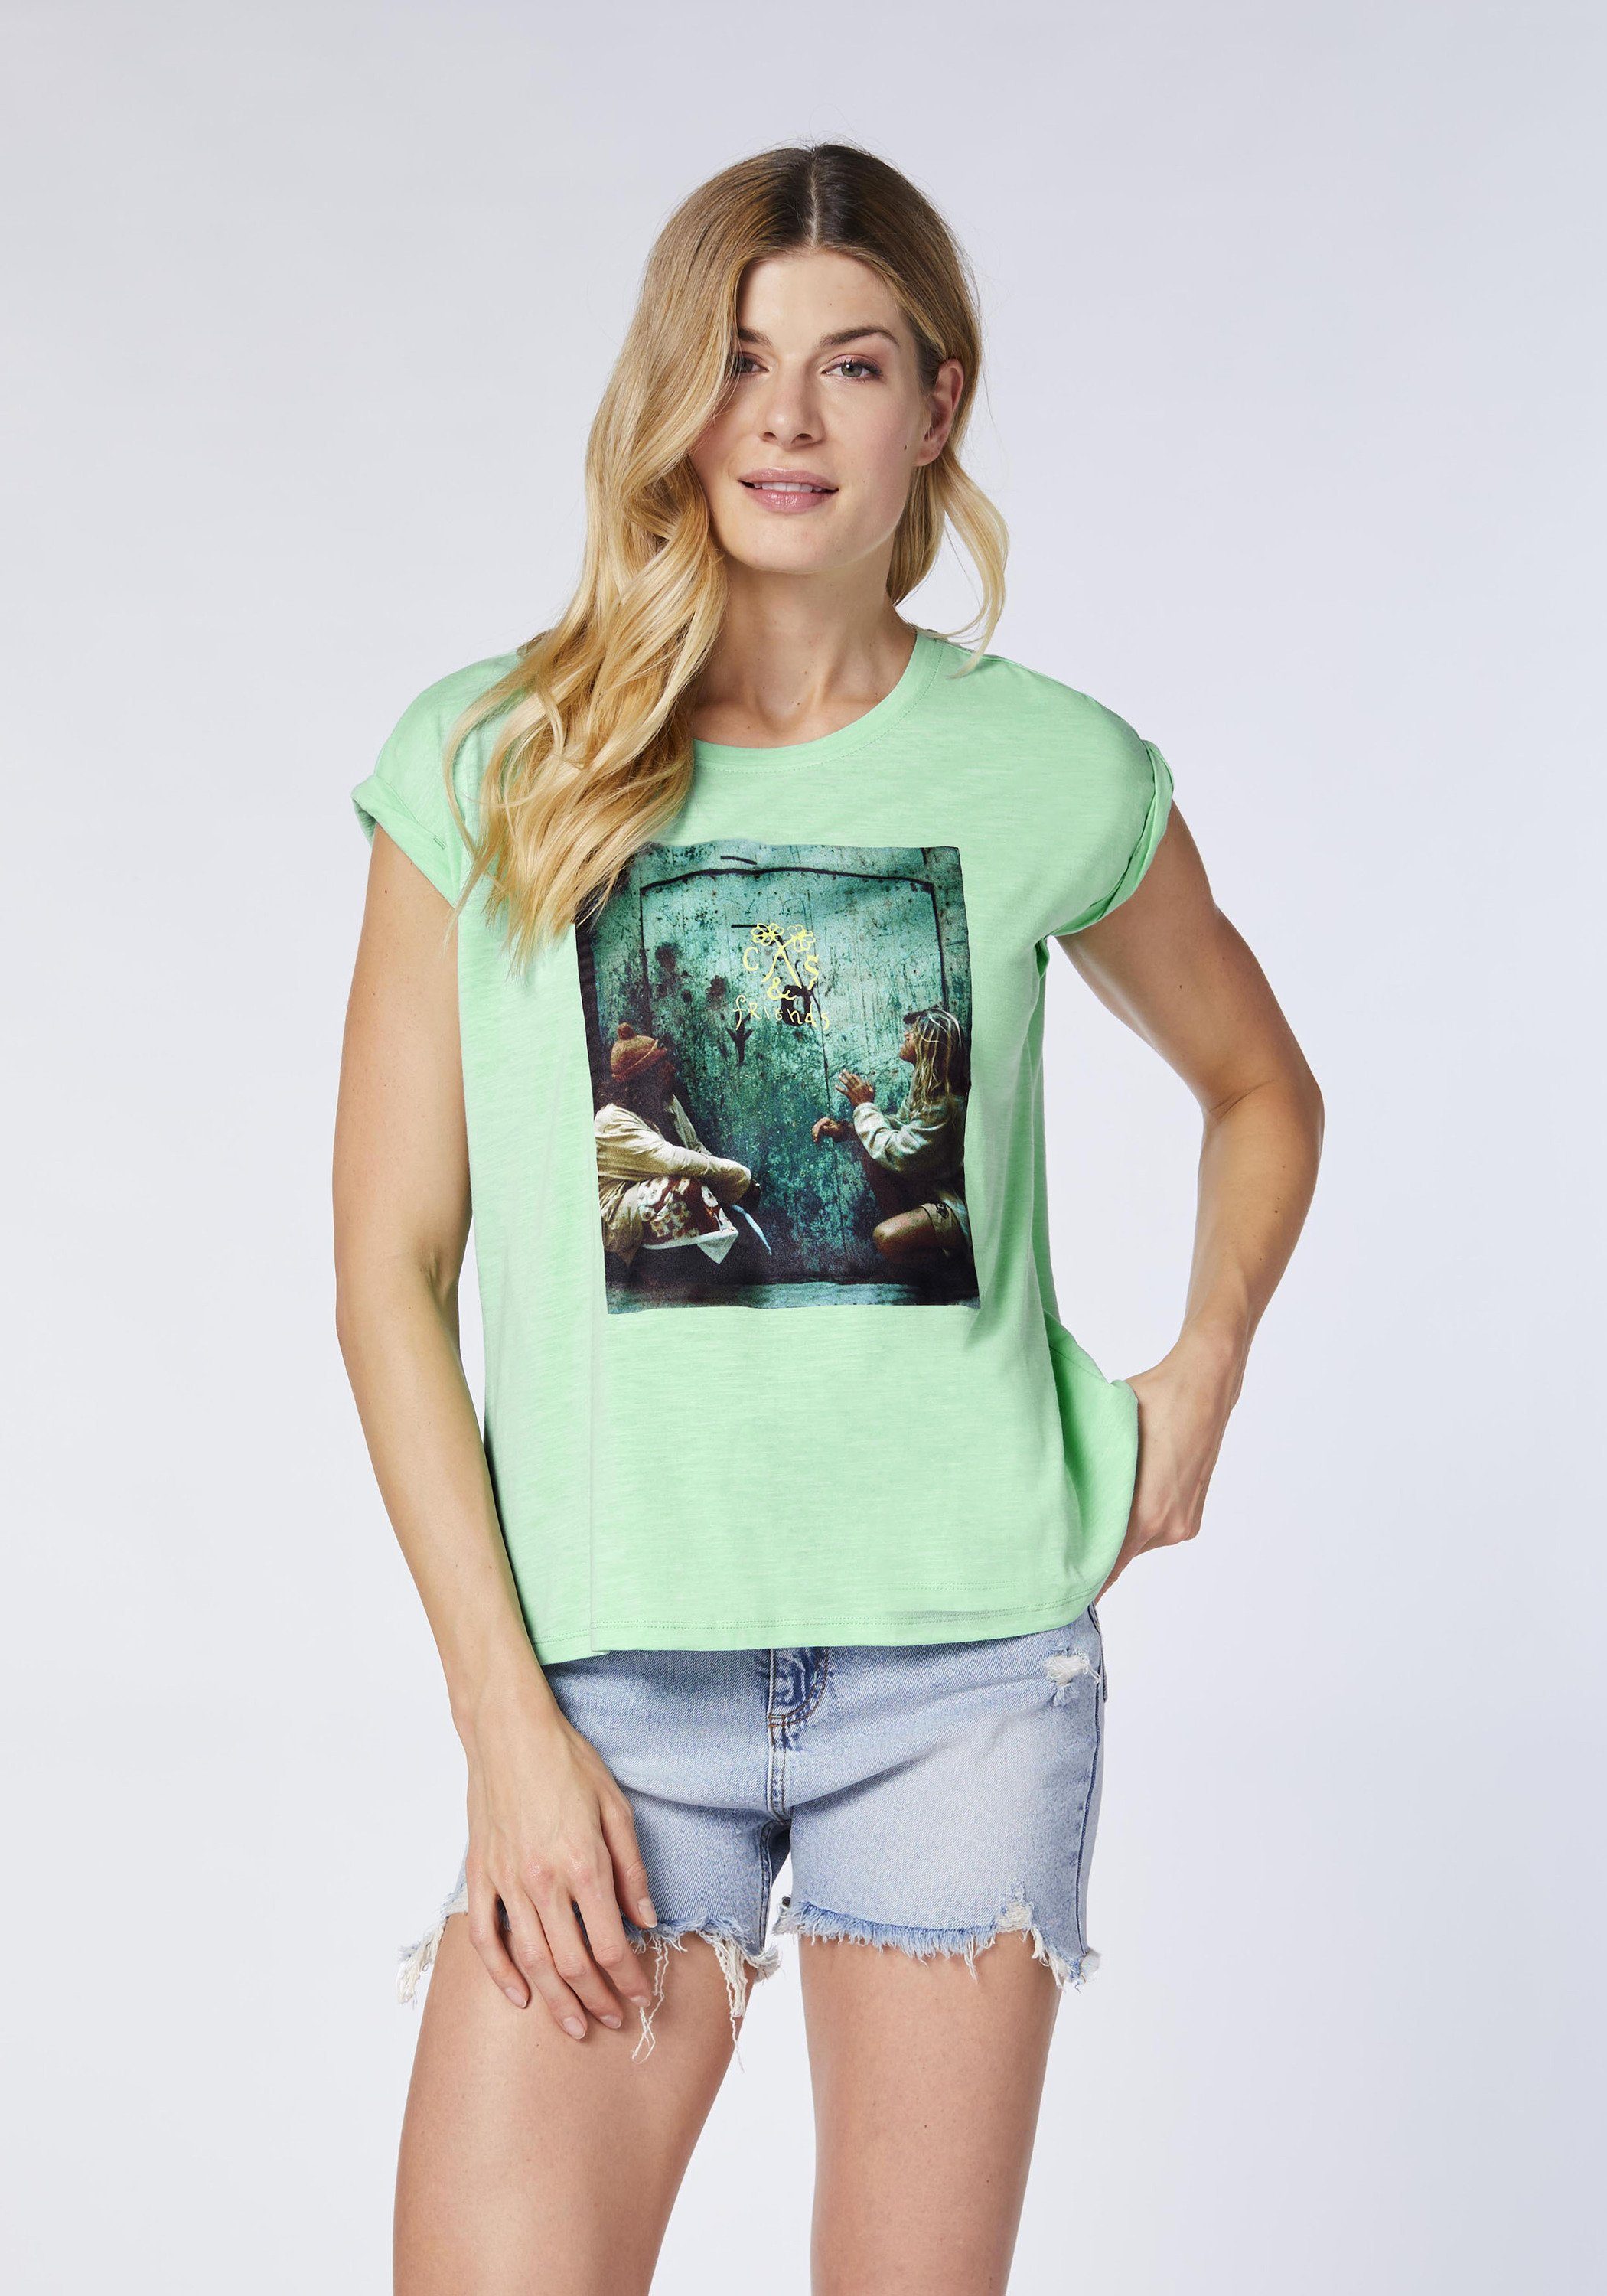 Print-Shirt Neptune mehrfarbigem T-Shirt mit Frontprint Chiemsee 1 Green